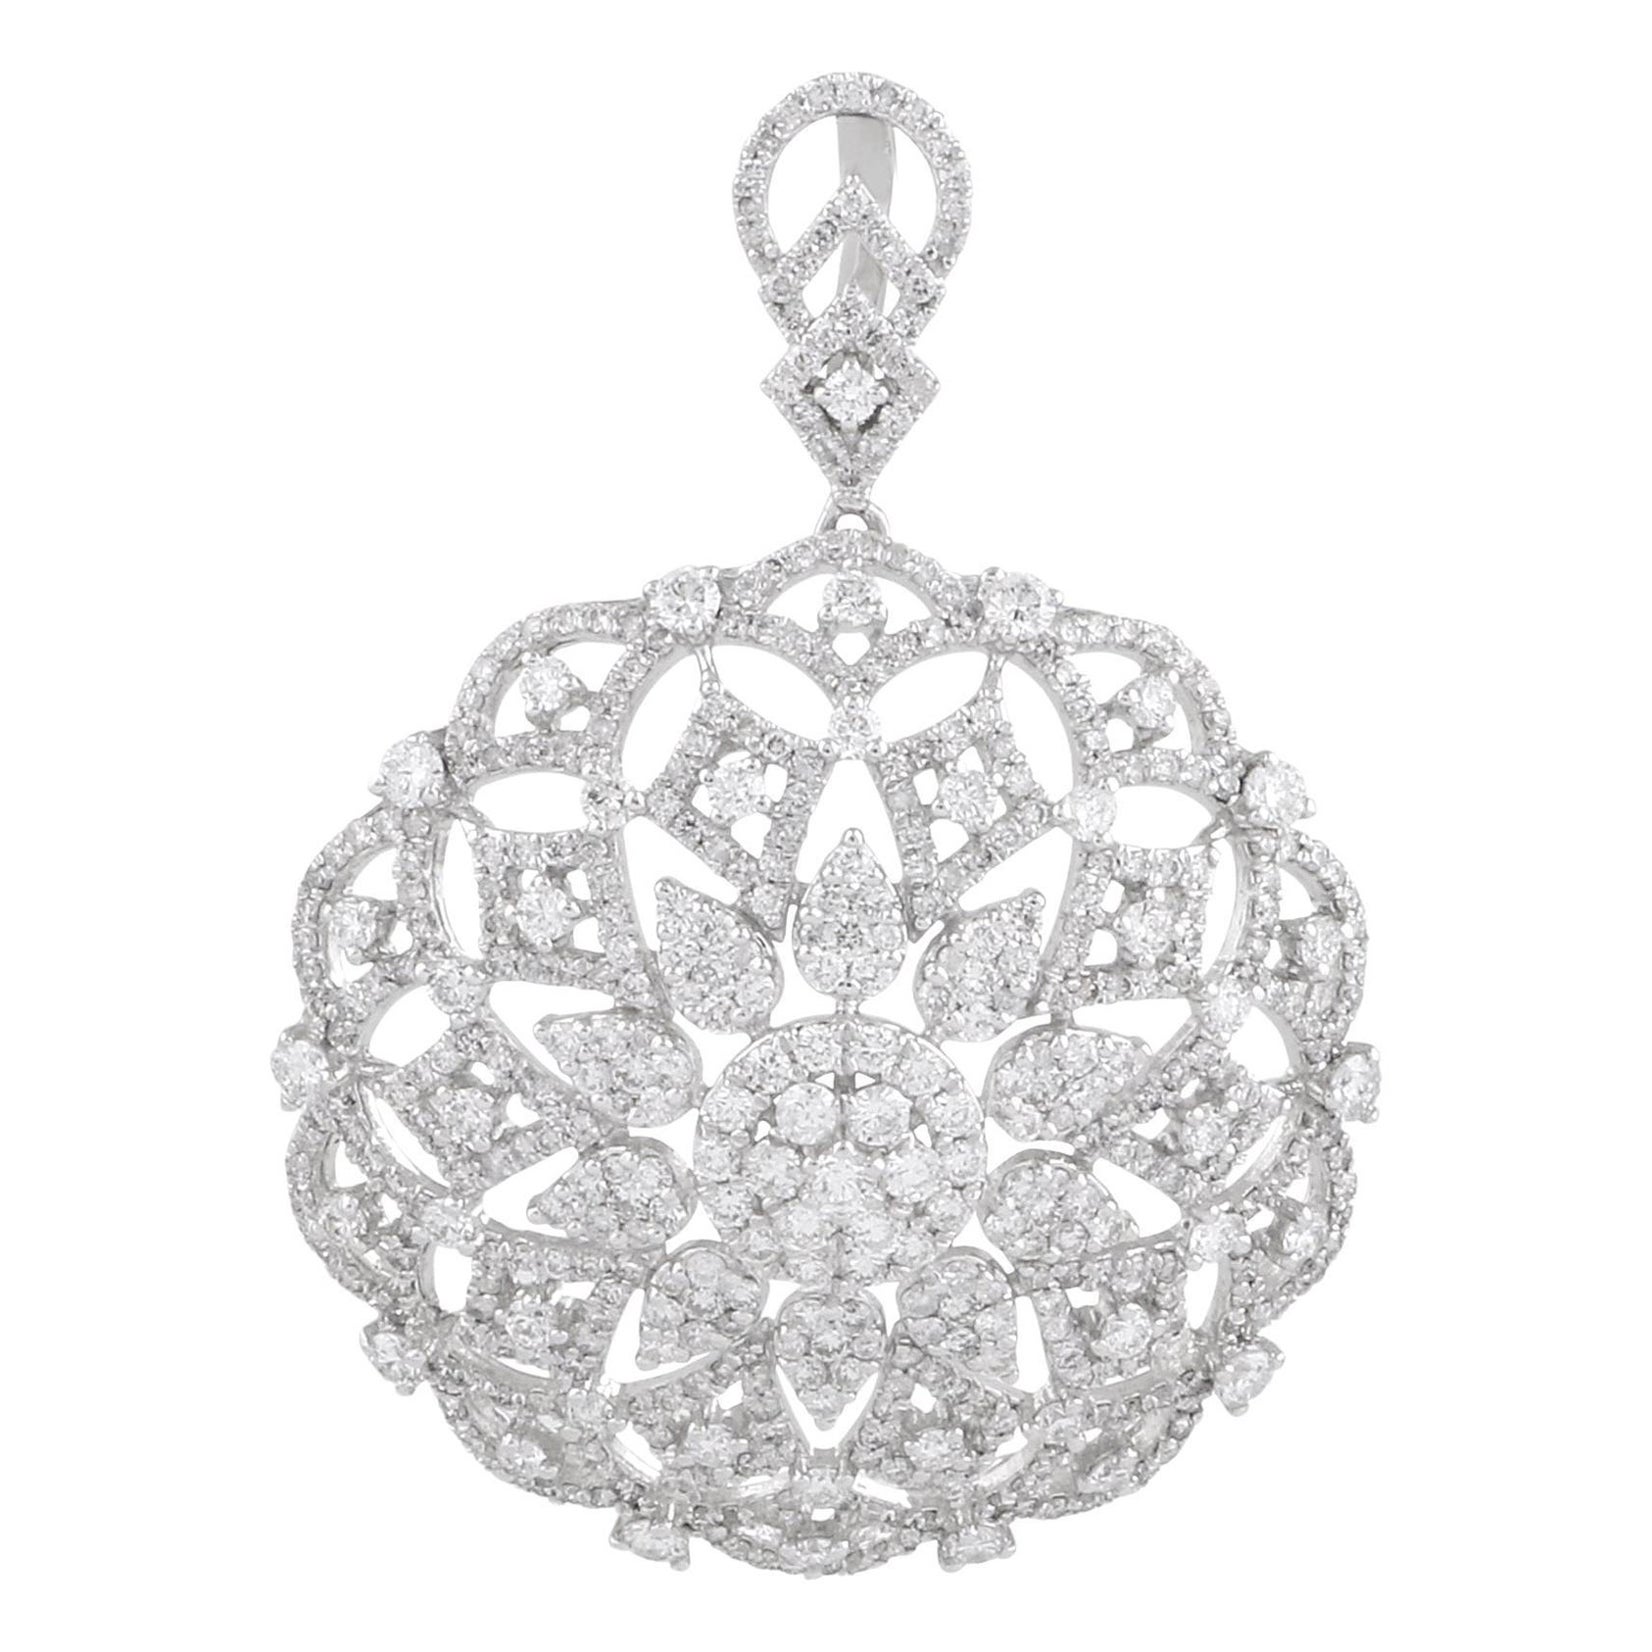 3.65 Carat Diamond Flower Design Pendant 10 Karat White Gold Handmade Jewelry For Sale